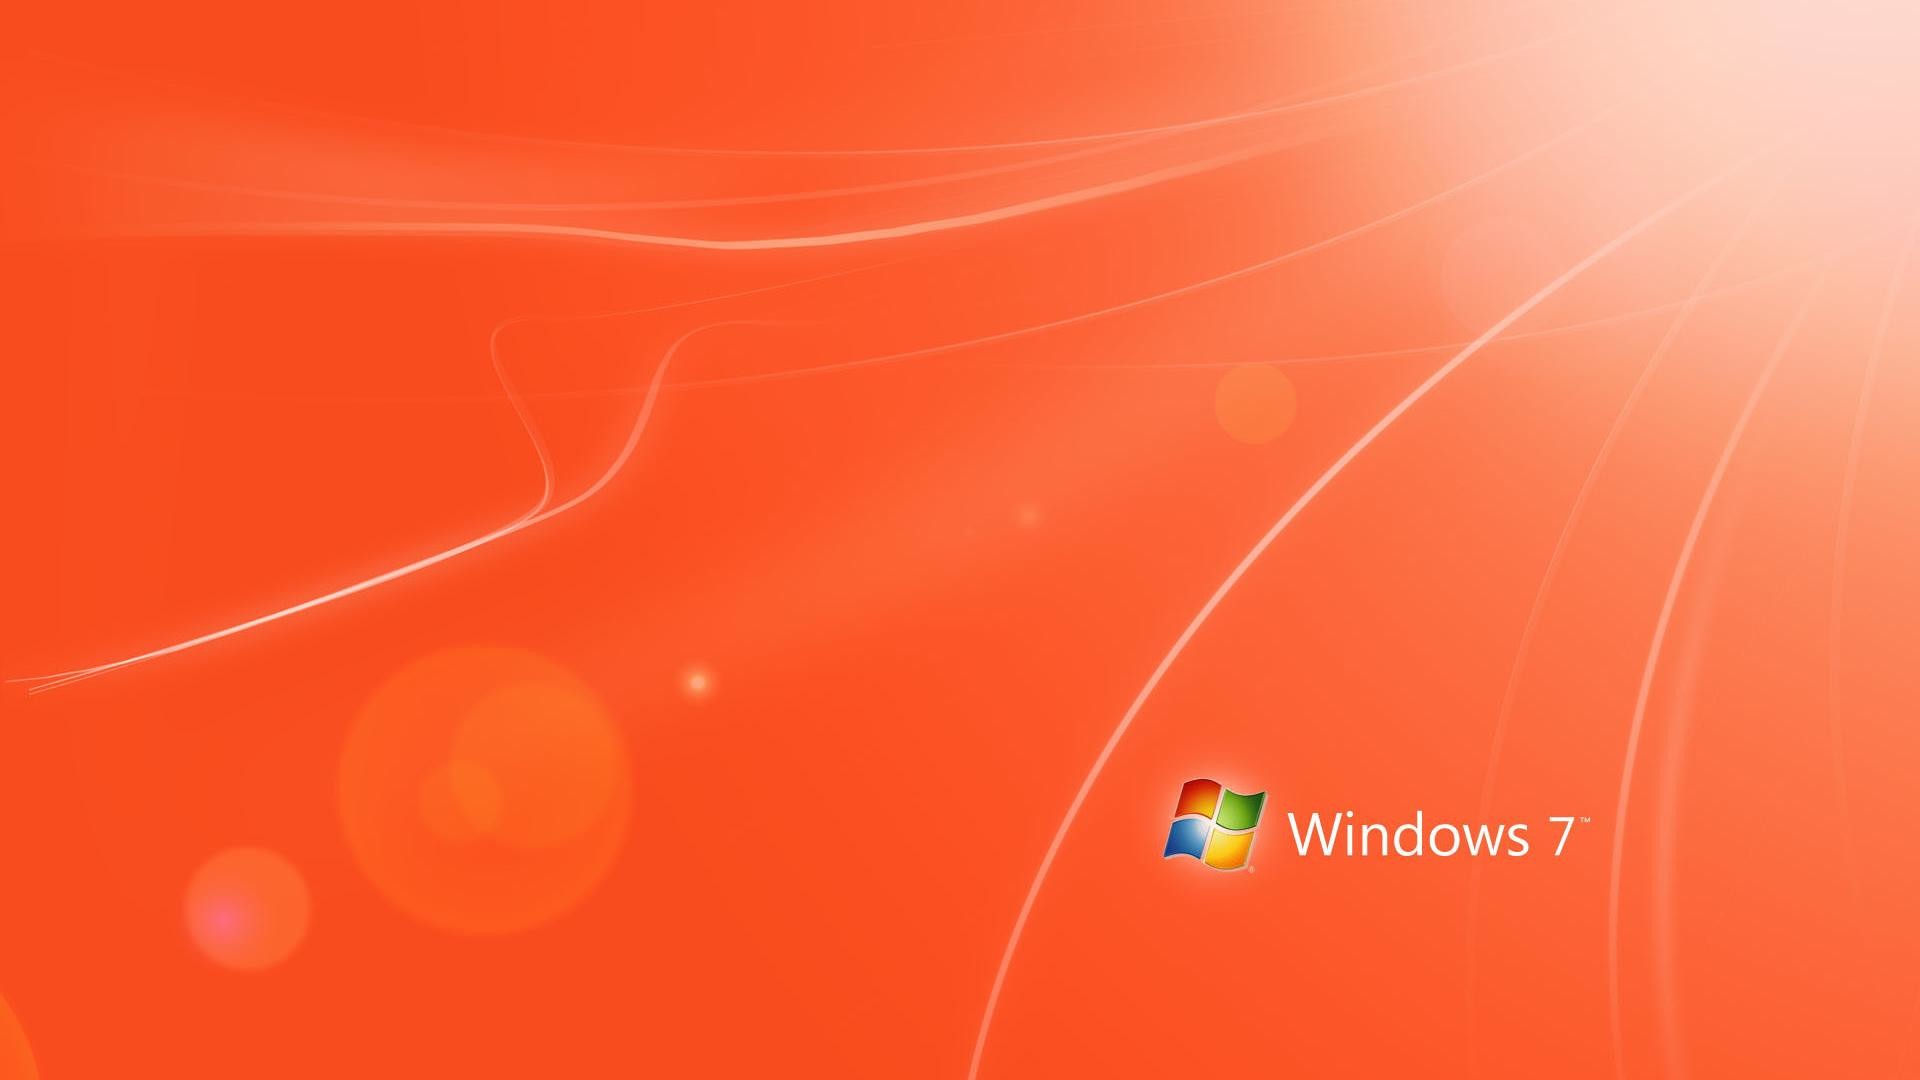 1920x1080  Cool red Windows 7 desktop backgrounds wide  wallpapers:1280x800,1440x900,1680x1050 -